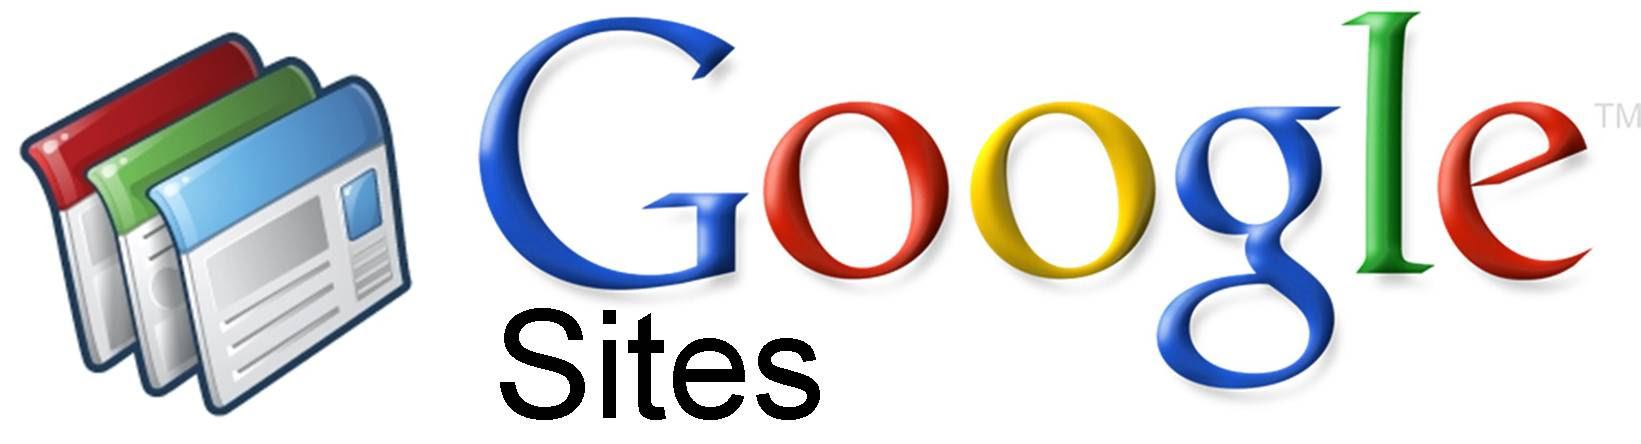 Https sites g. Google sites. Гугл сайты. Гугл картинки.